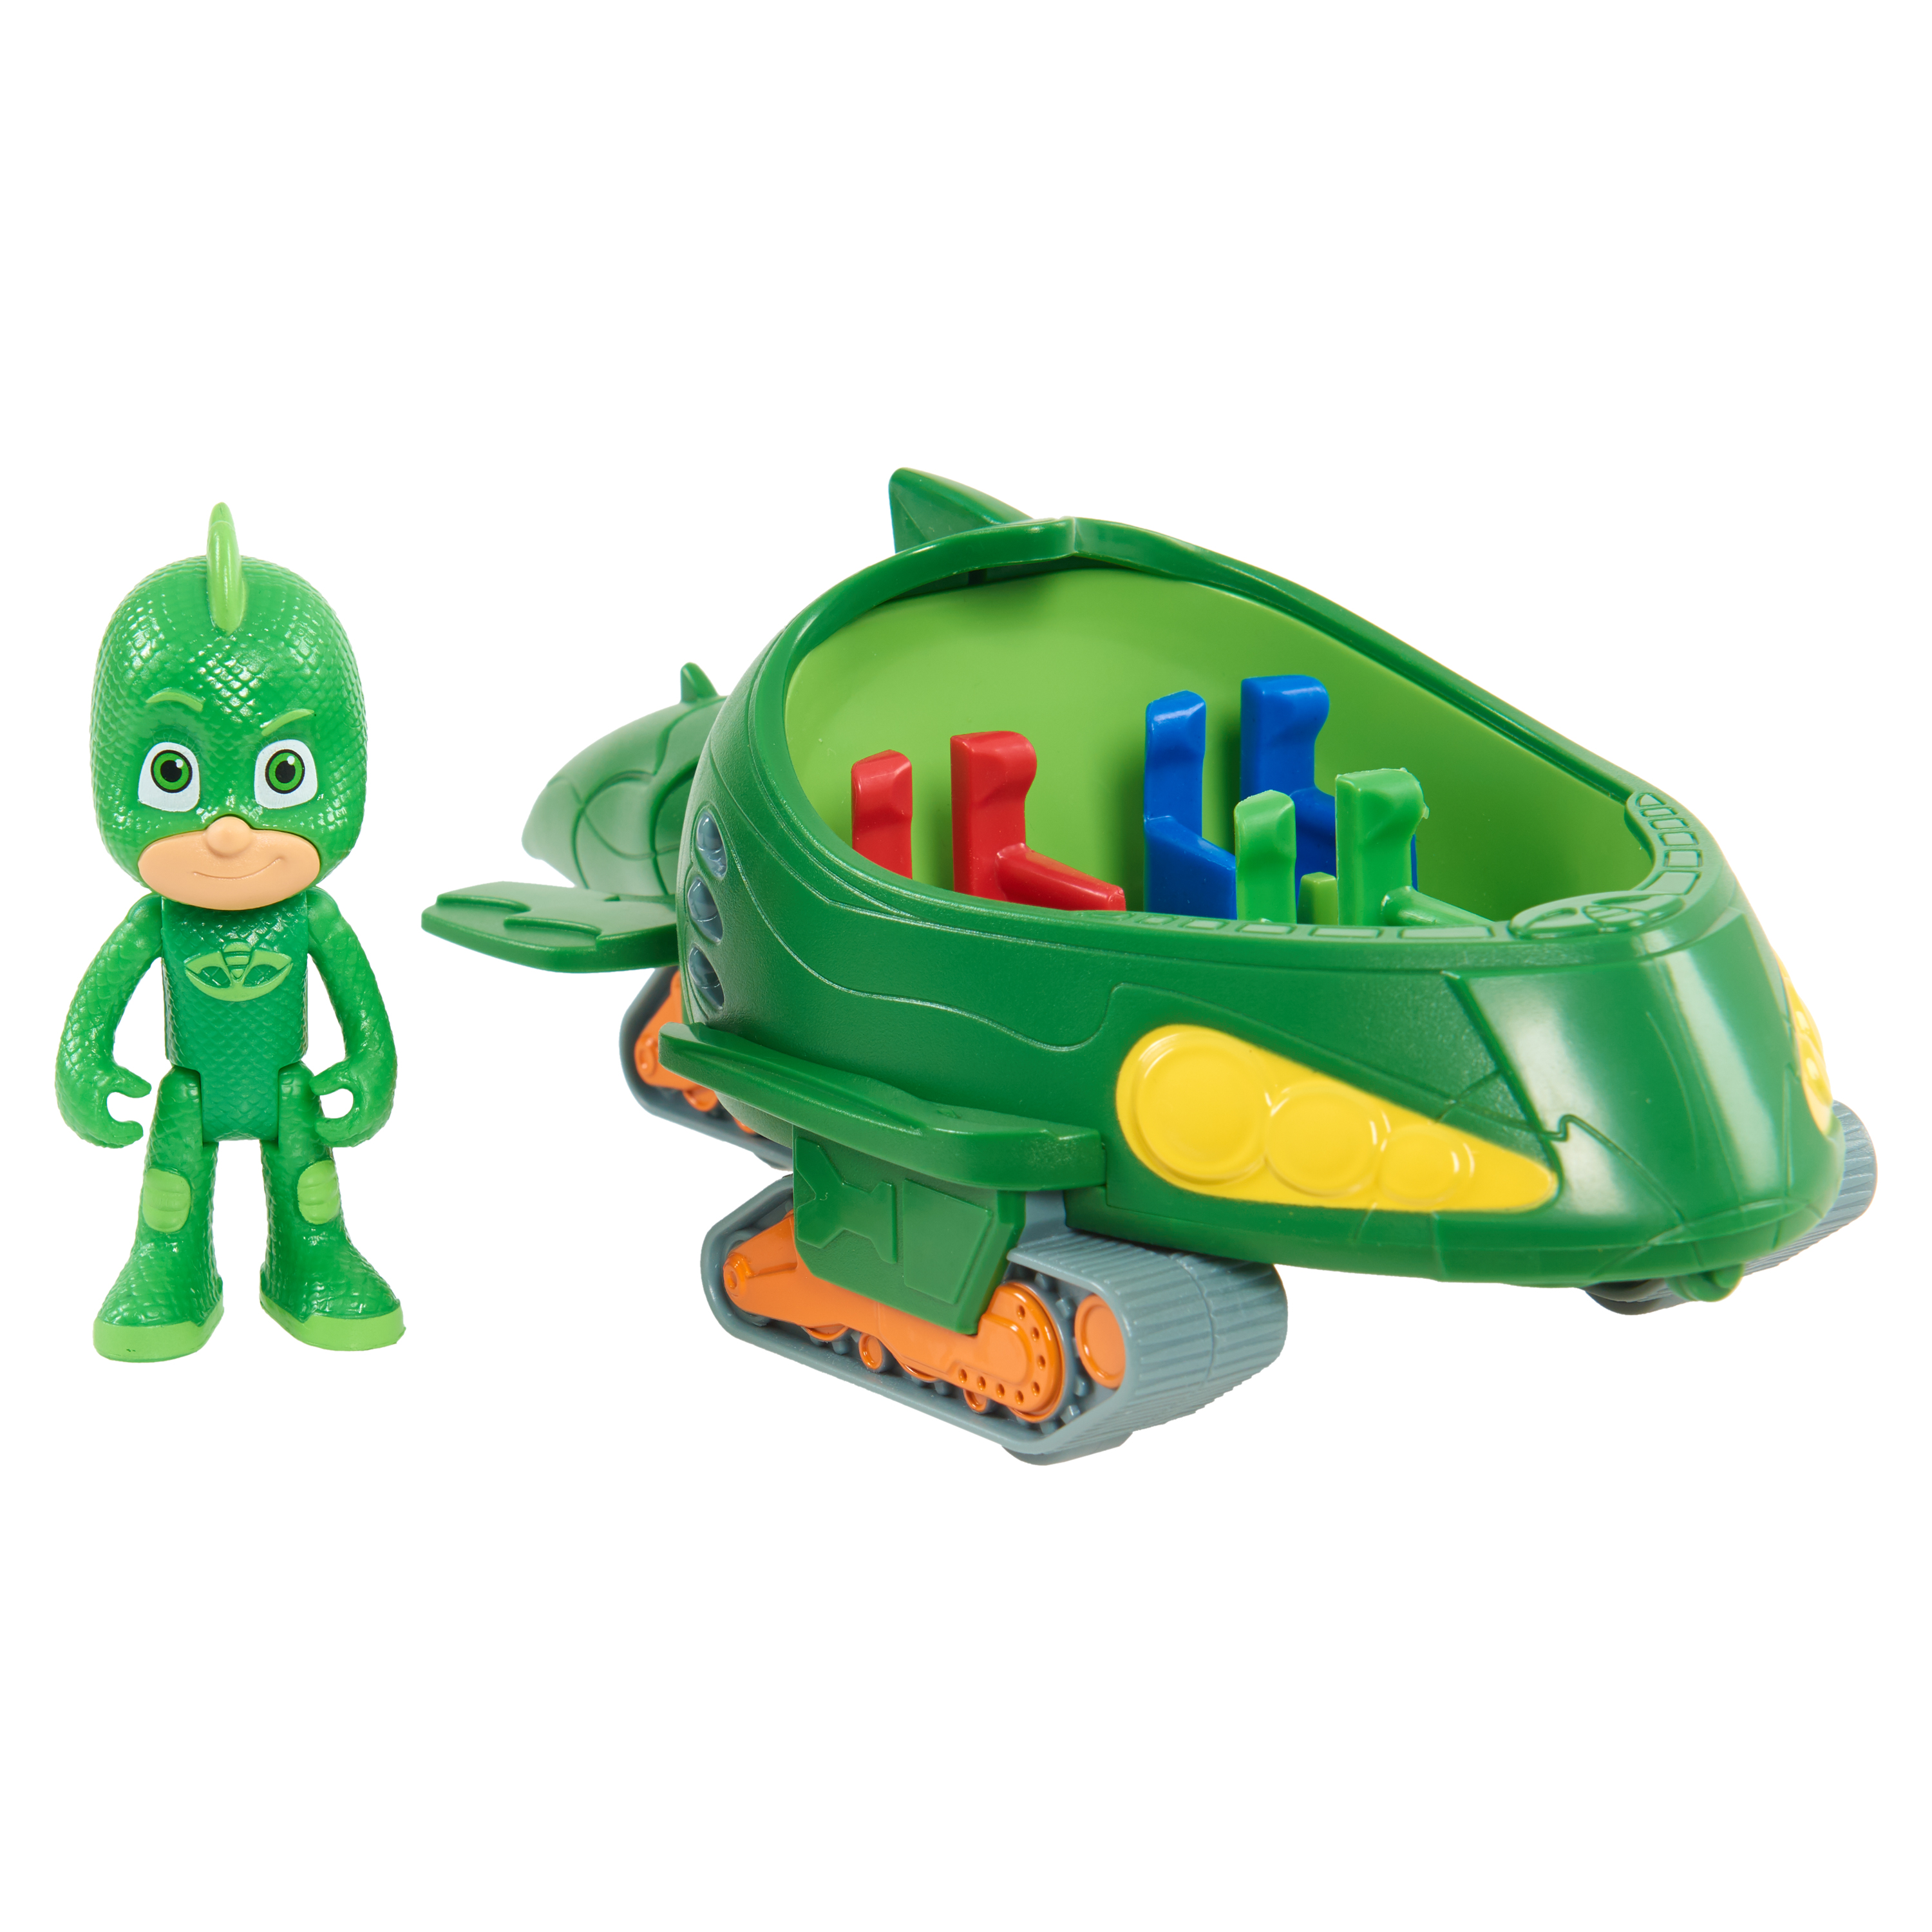 PJ Masks Vehicle - Gekko Mobile & Gekko Action Figure Sets - image 1 of 5